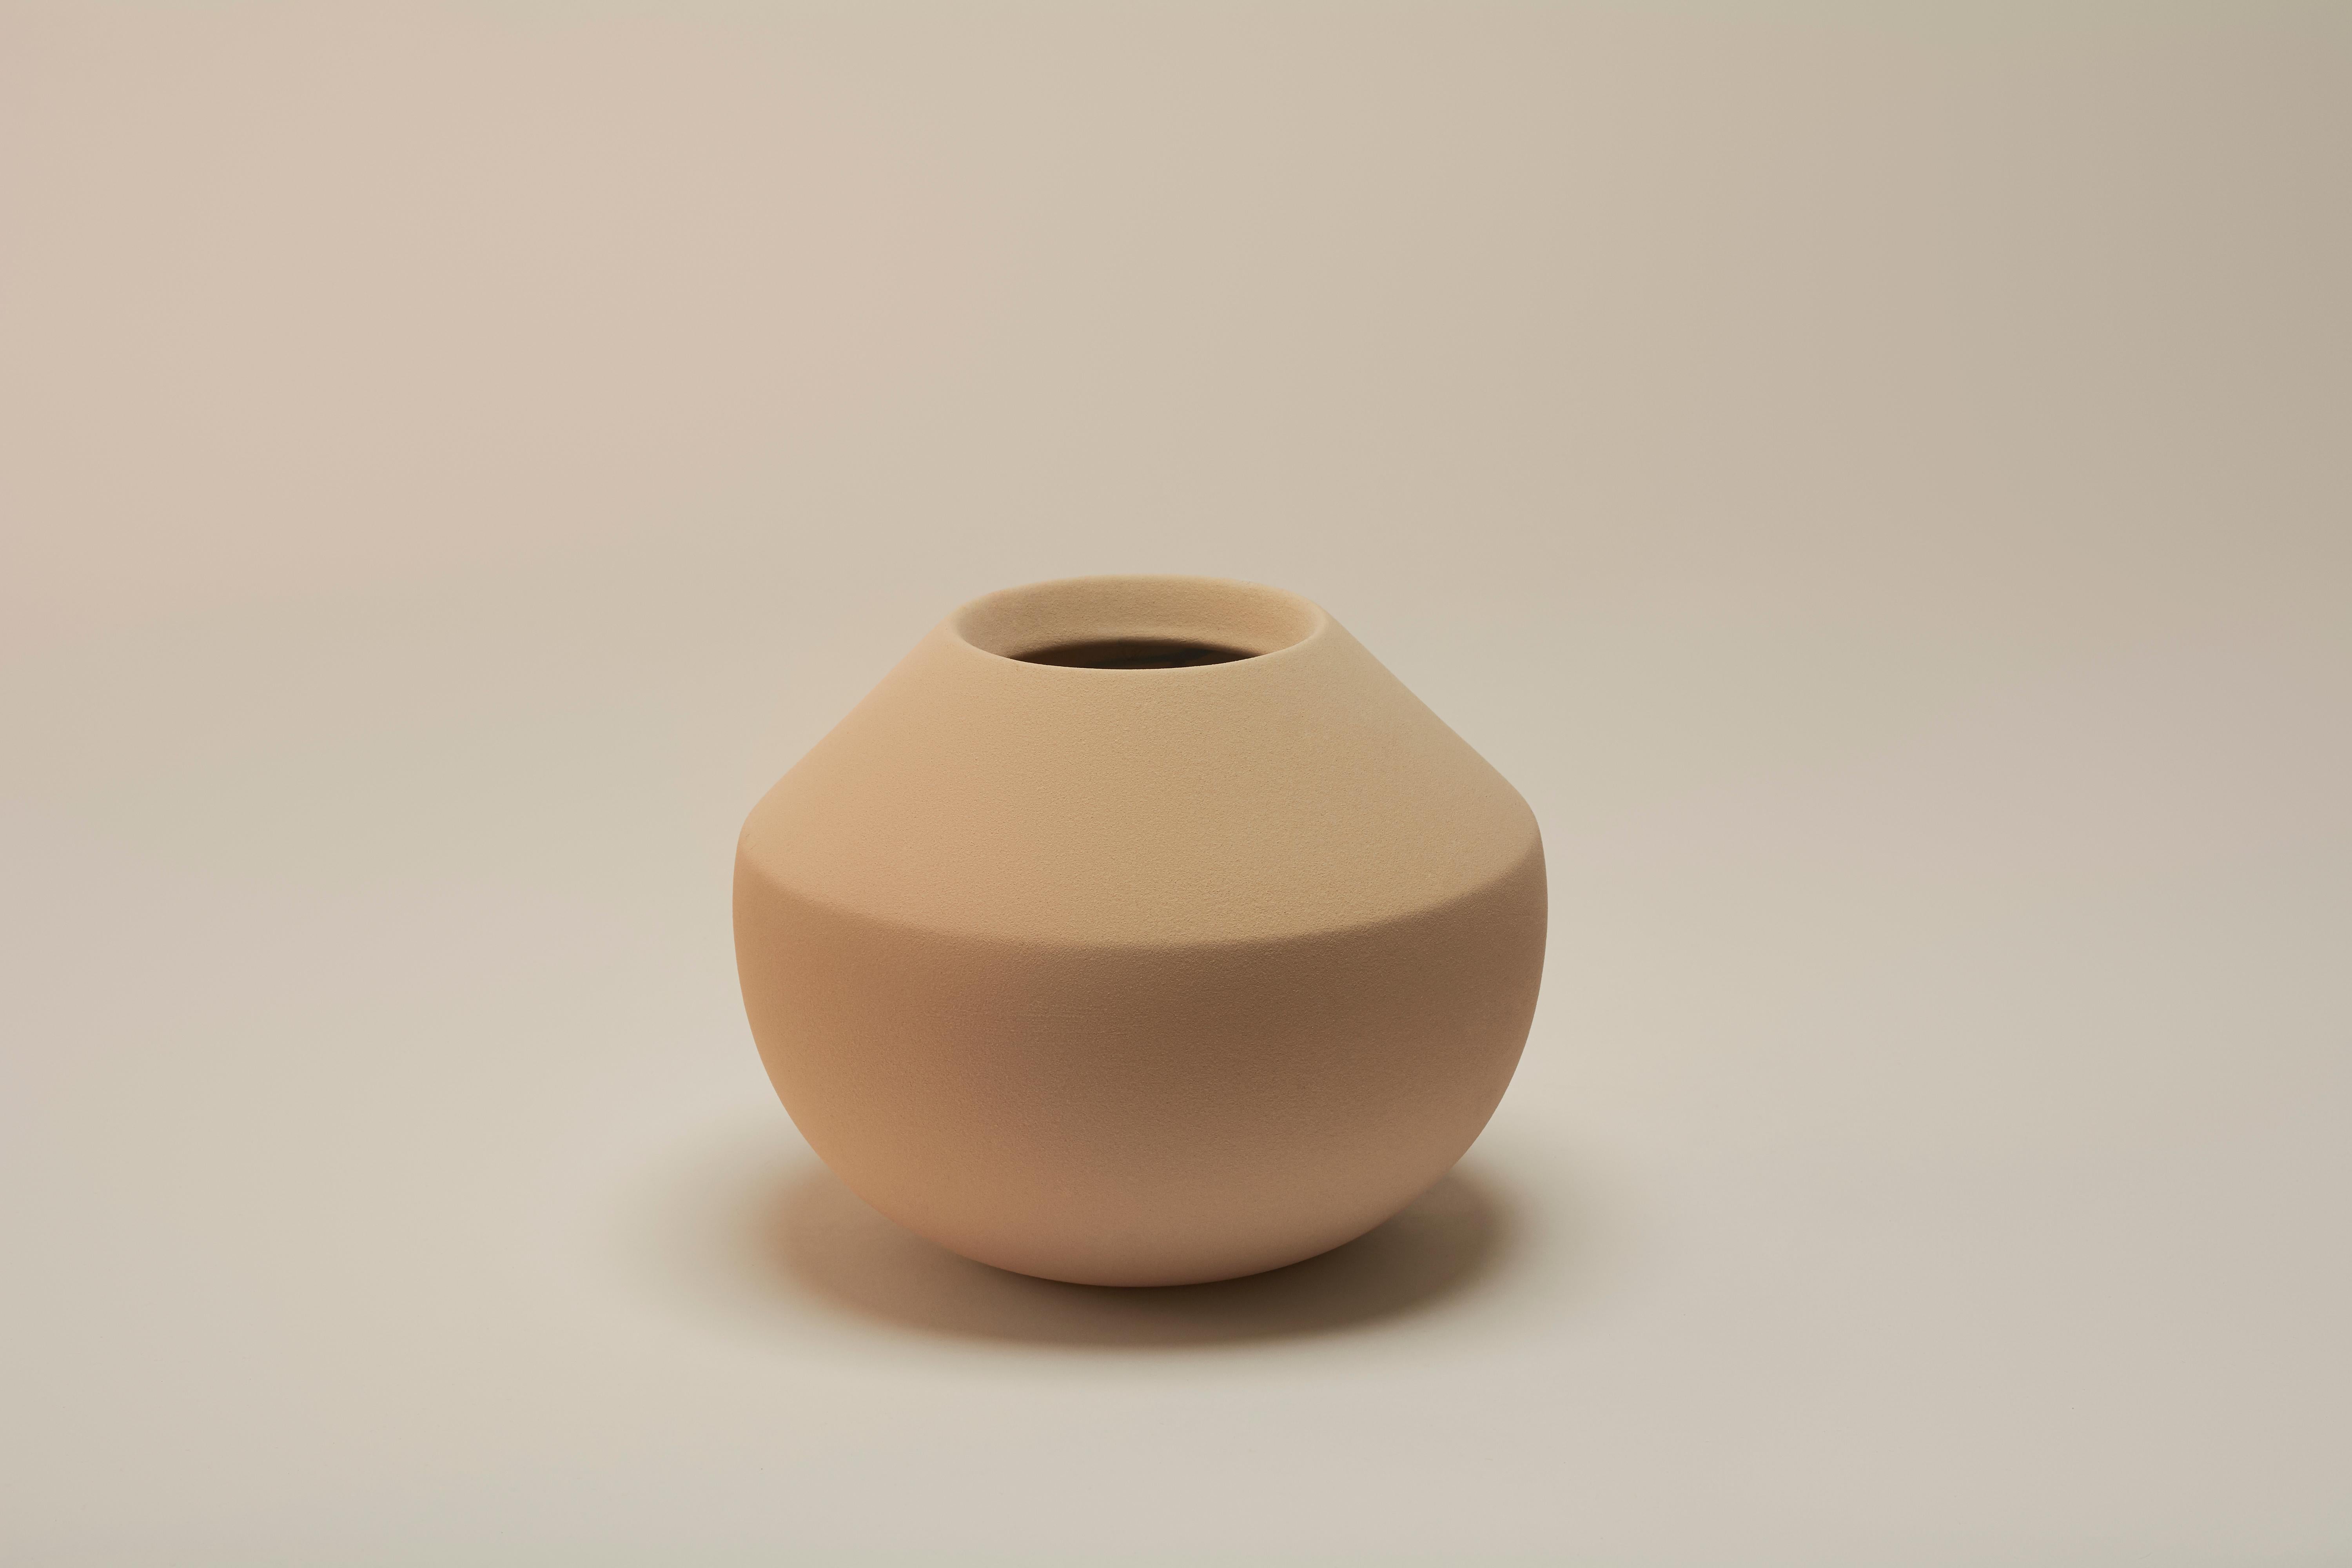 Apo vase by Lilia Cruz Corona Garduño
Dimensions: W 19 x D 19 x H 16 cm
Materials: high-temperature ceramics (stoneware) and vitrified glaze

Platalea studio was born out of a passion for both art and design. We love how both are so